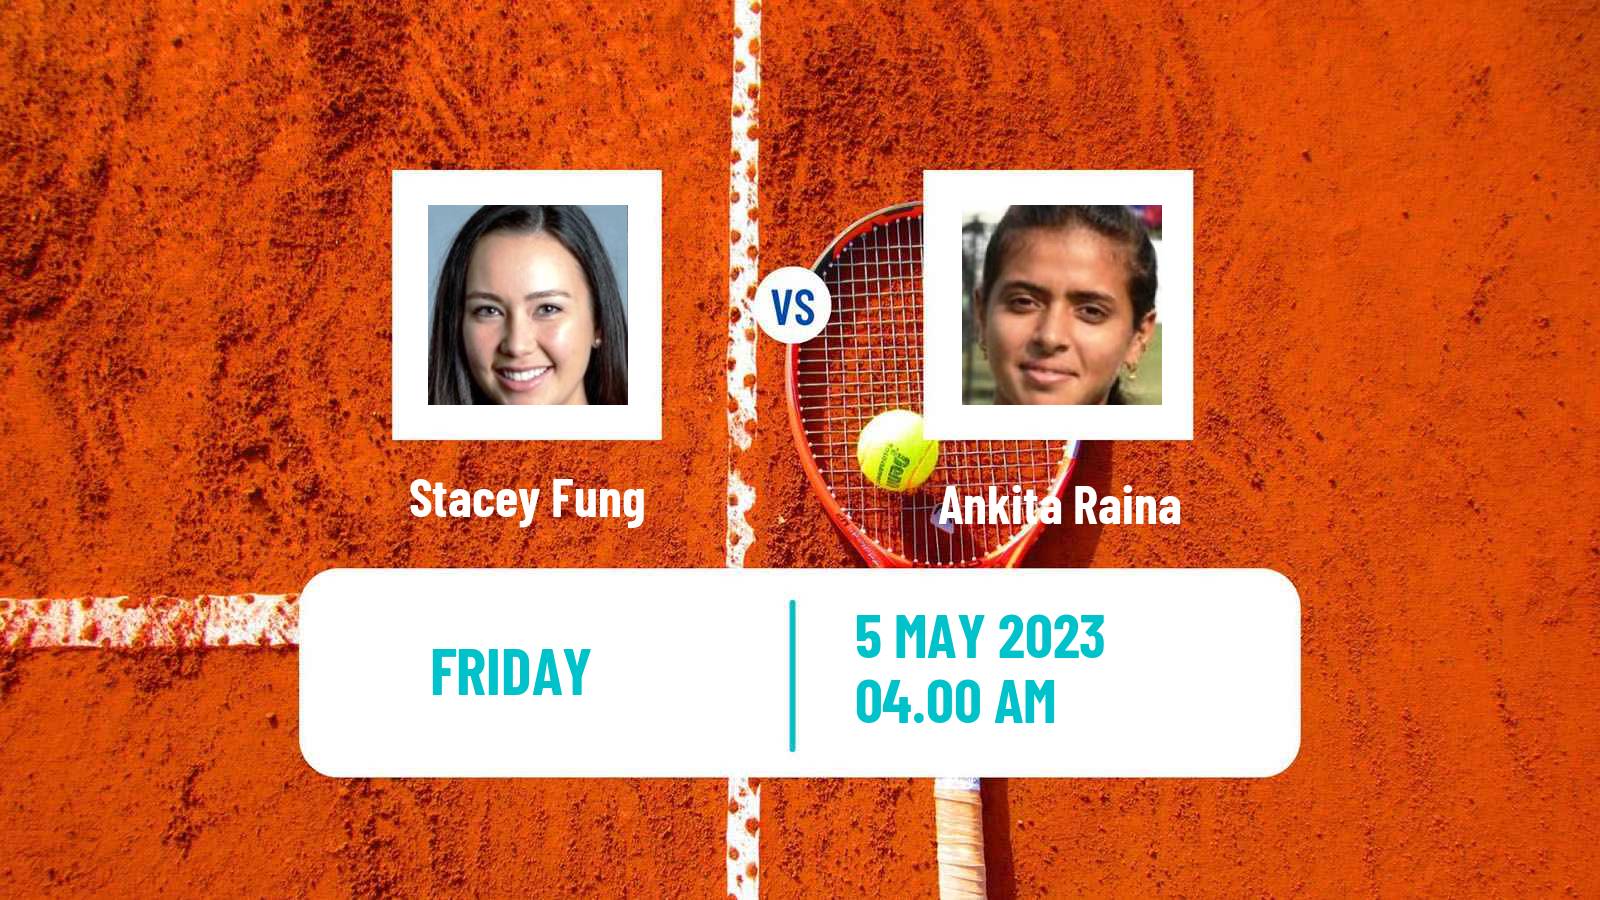 Tennis ITF Tournaments Stacey Fung - Ankita Raina